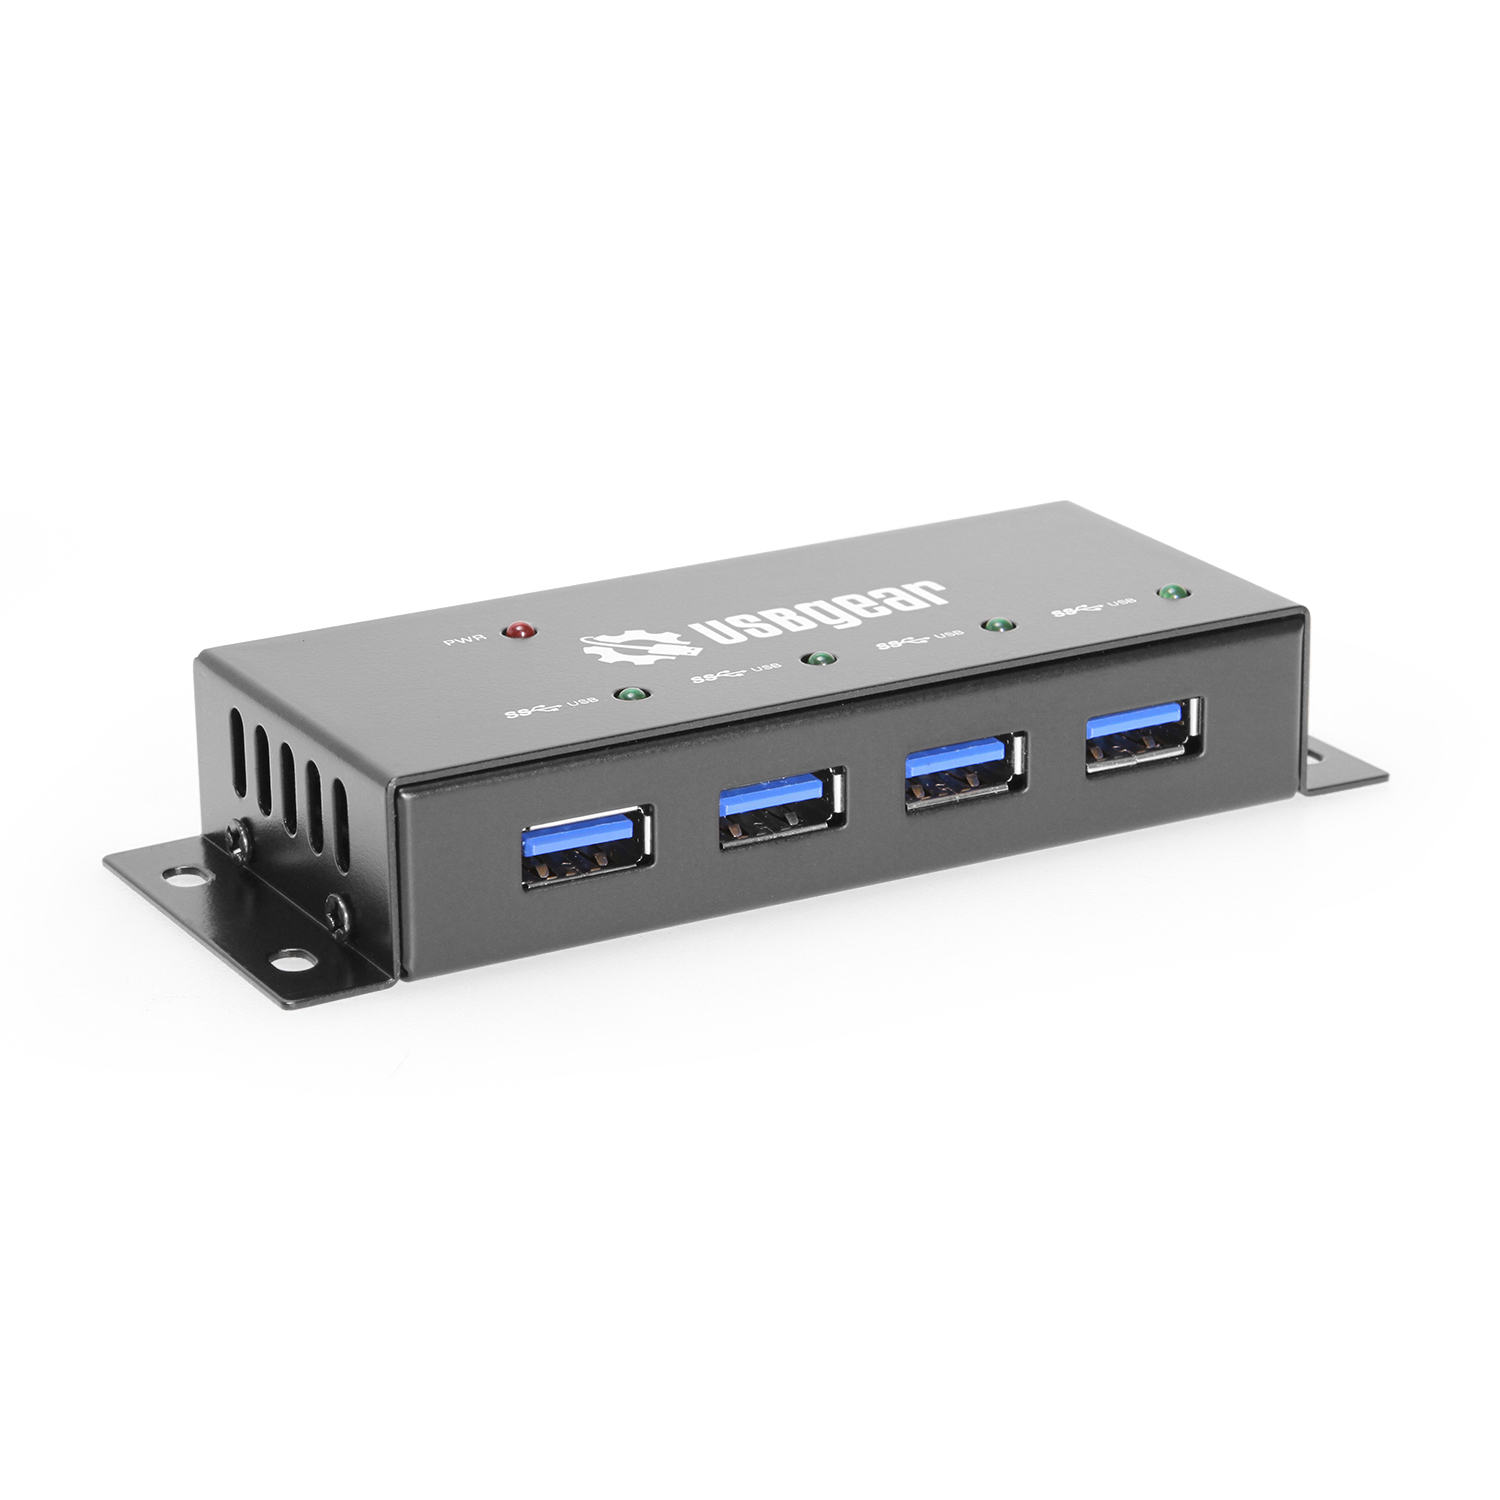 TRENDnet 4-Port USB 3.0 Mini Hub TU3-H4E B&H Photo Video